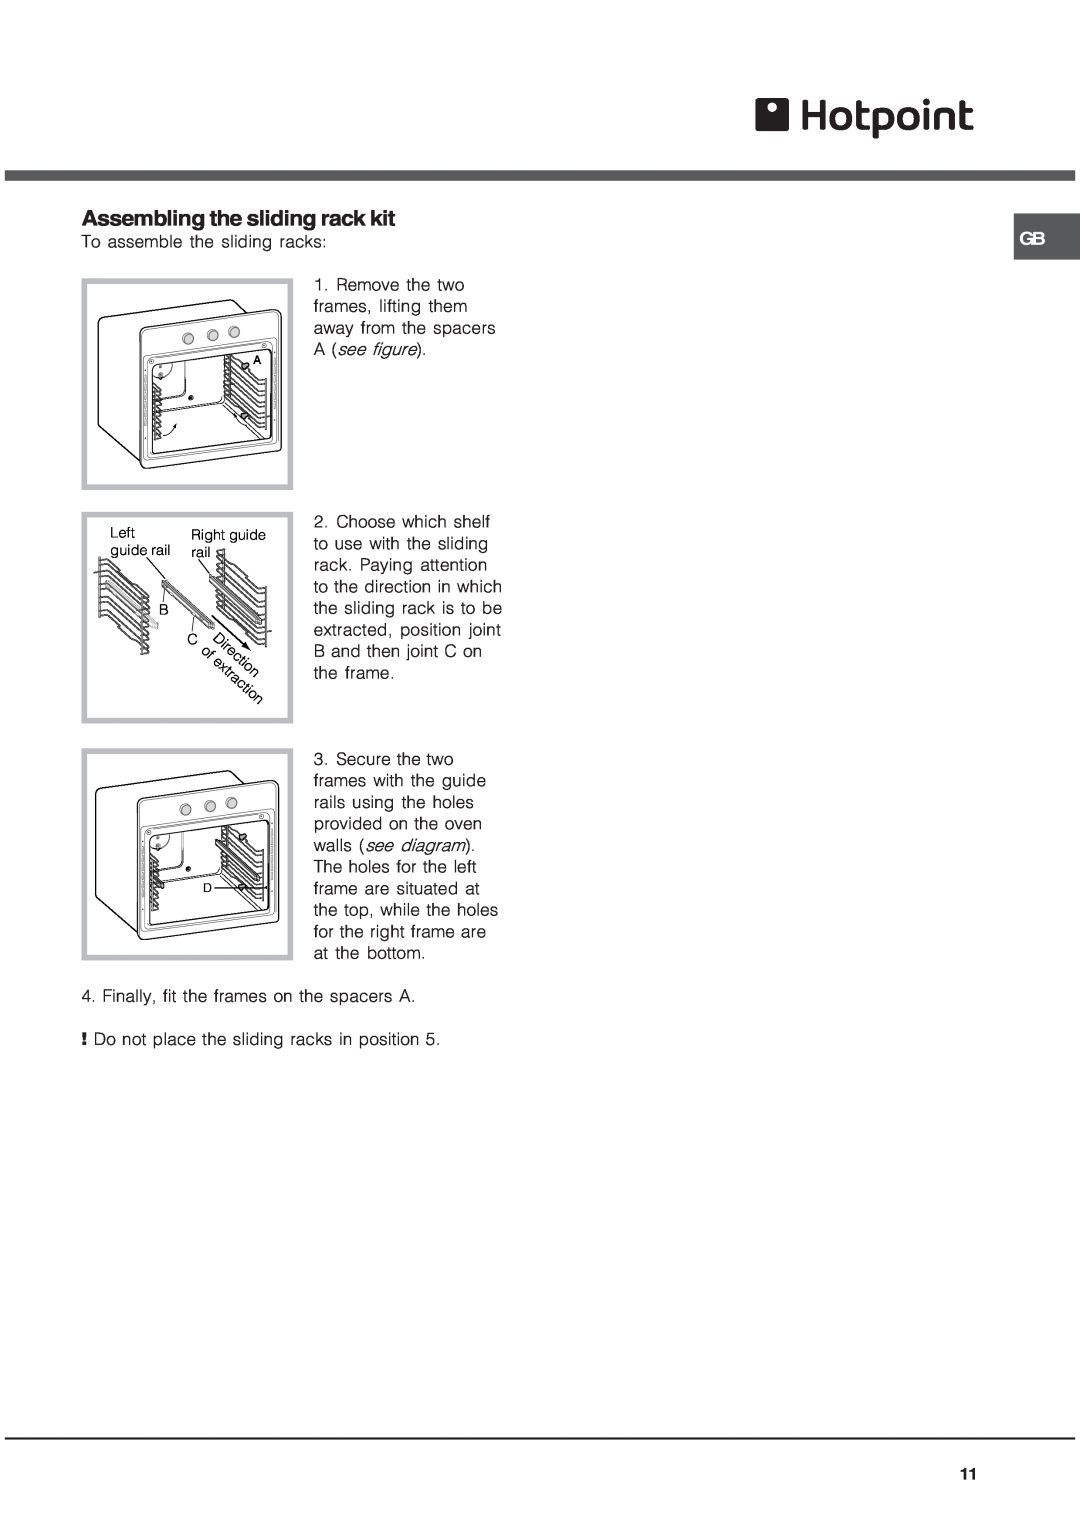 Hotpoint SQ892I manual Assembling the sliding rack kit 